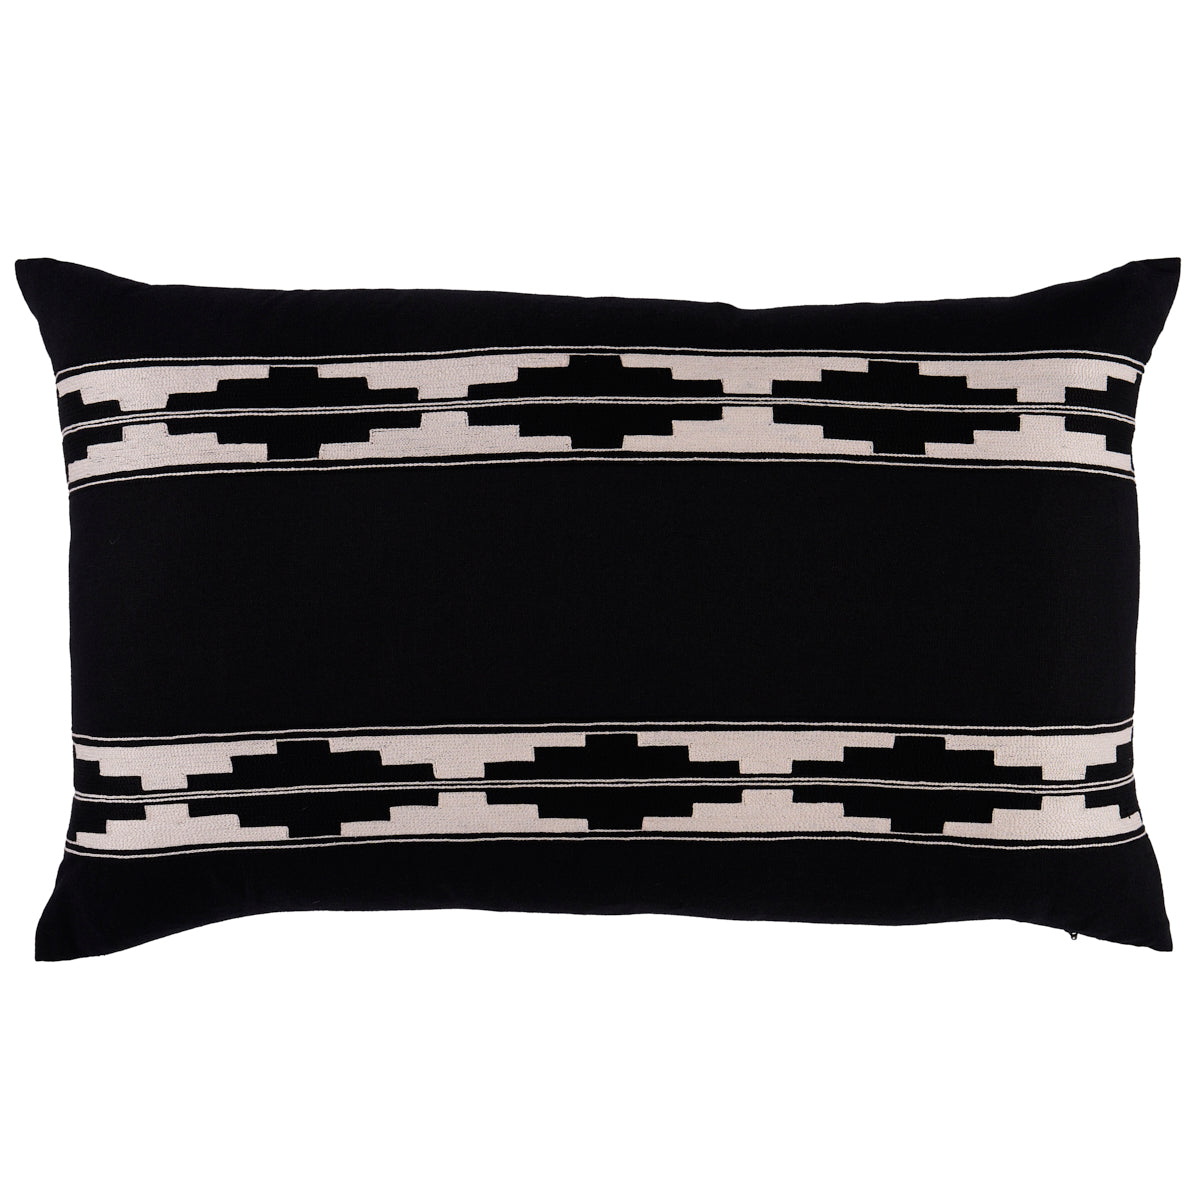 Purchase So0001619 | Kilim Pillow, Black & Ivory - Schumacher Pillows